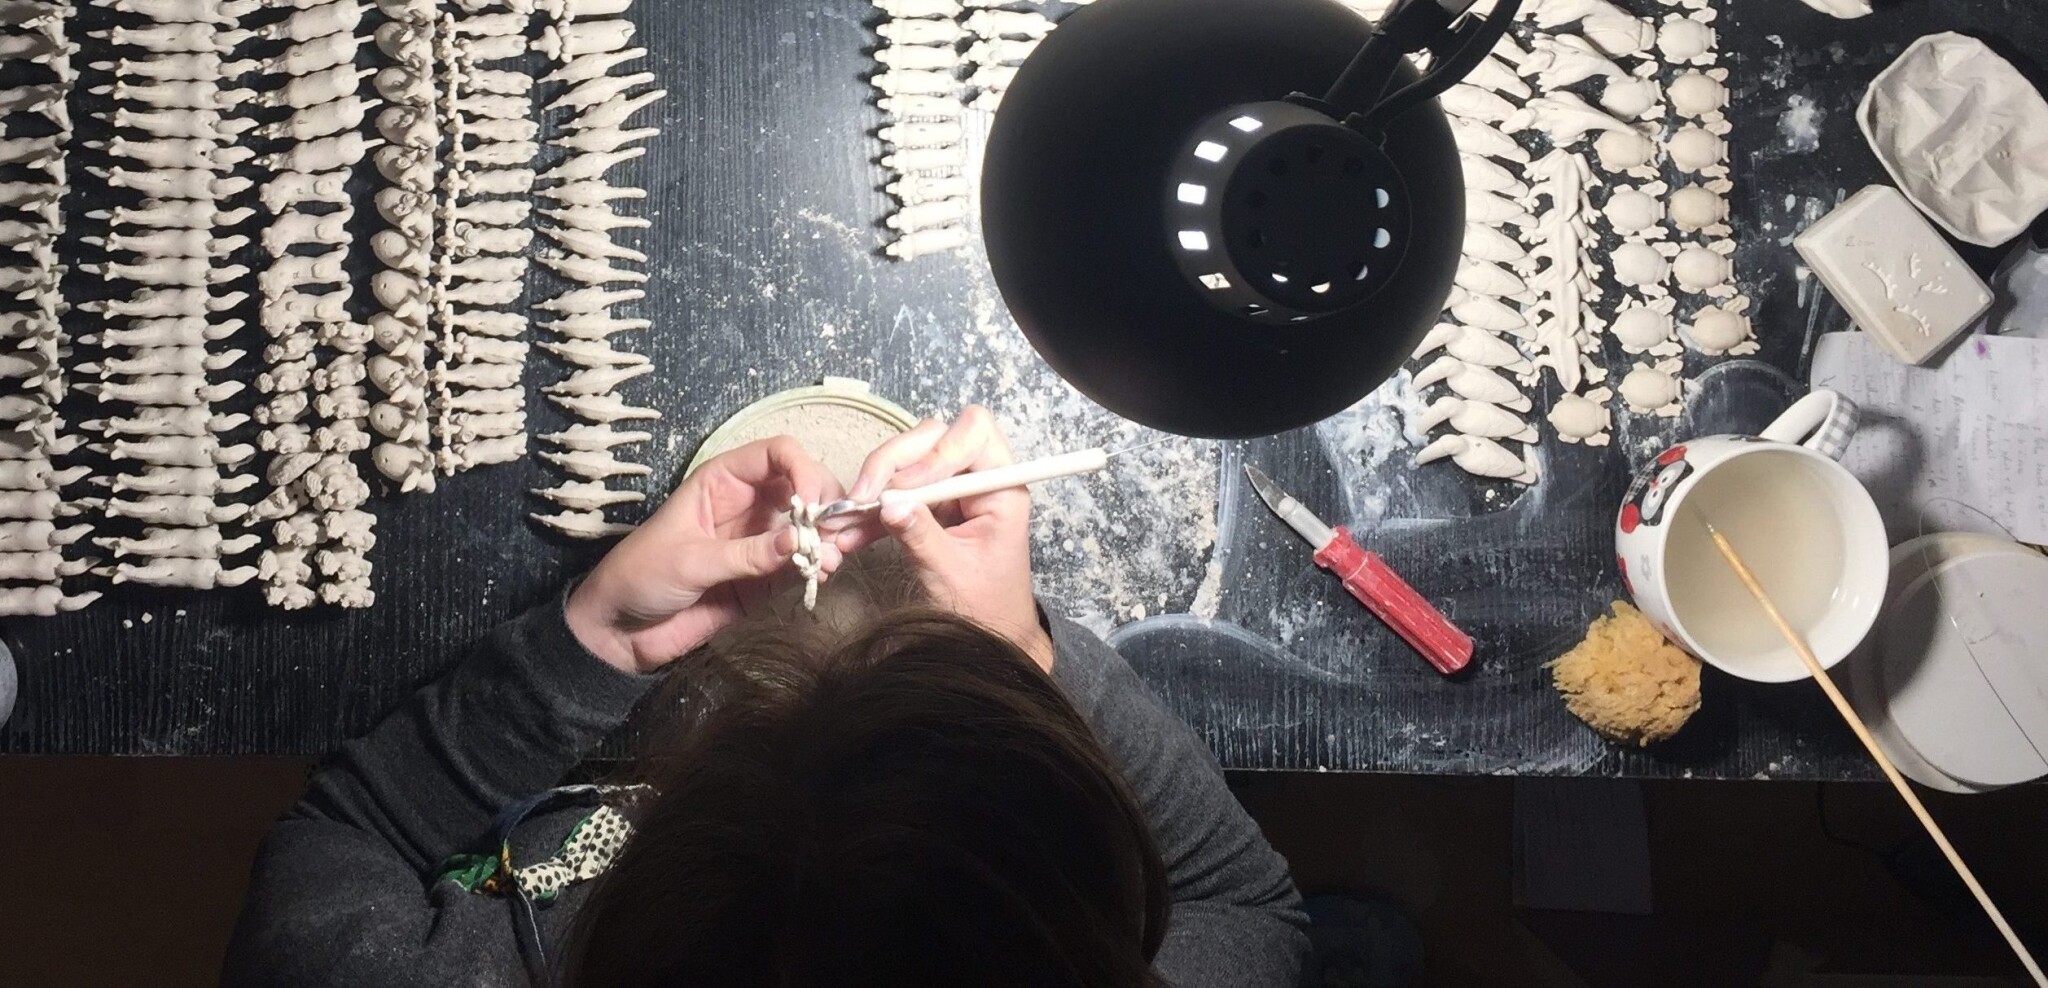 Perly prasatám a iné vylomeniny. Šperkárka Minka vyrába keramické ozdoby s jedinečným rukopisom